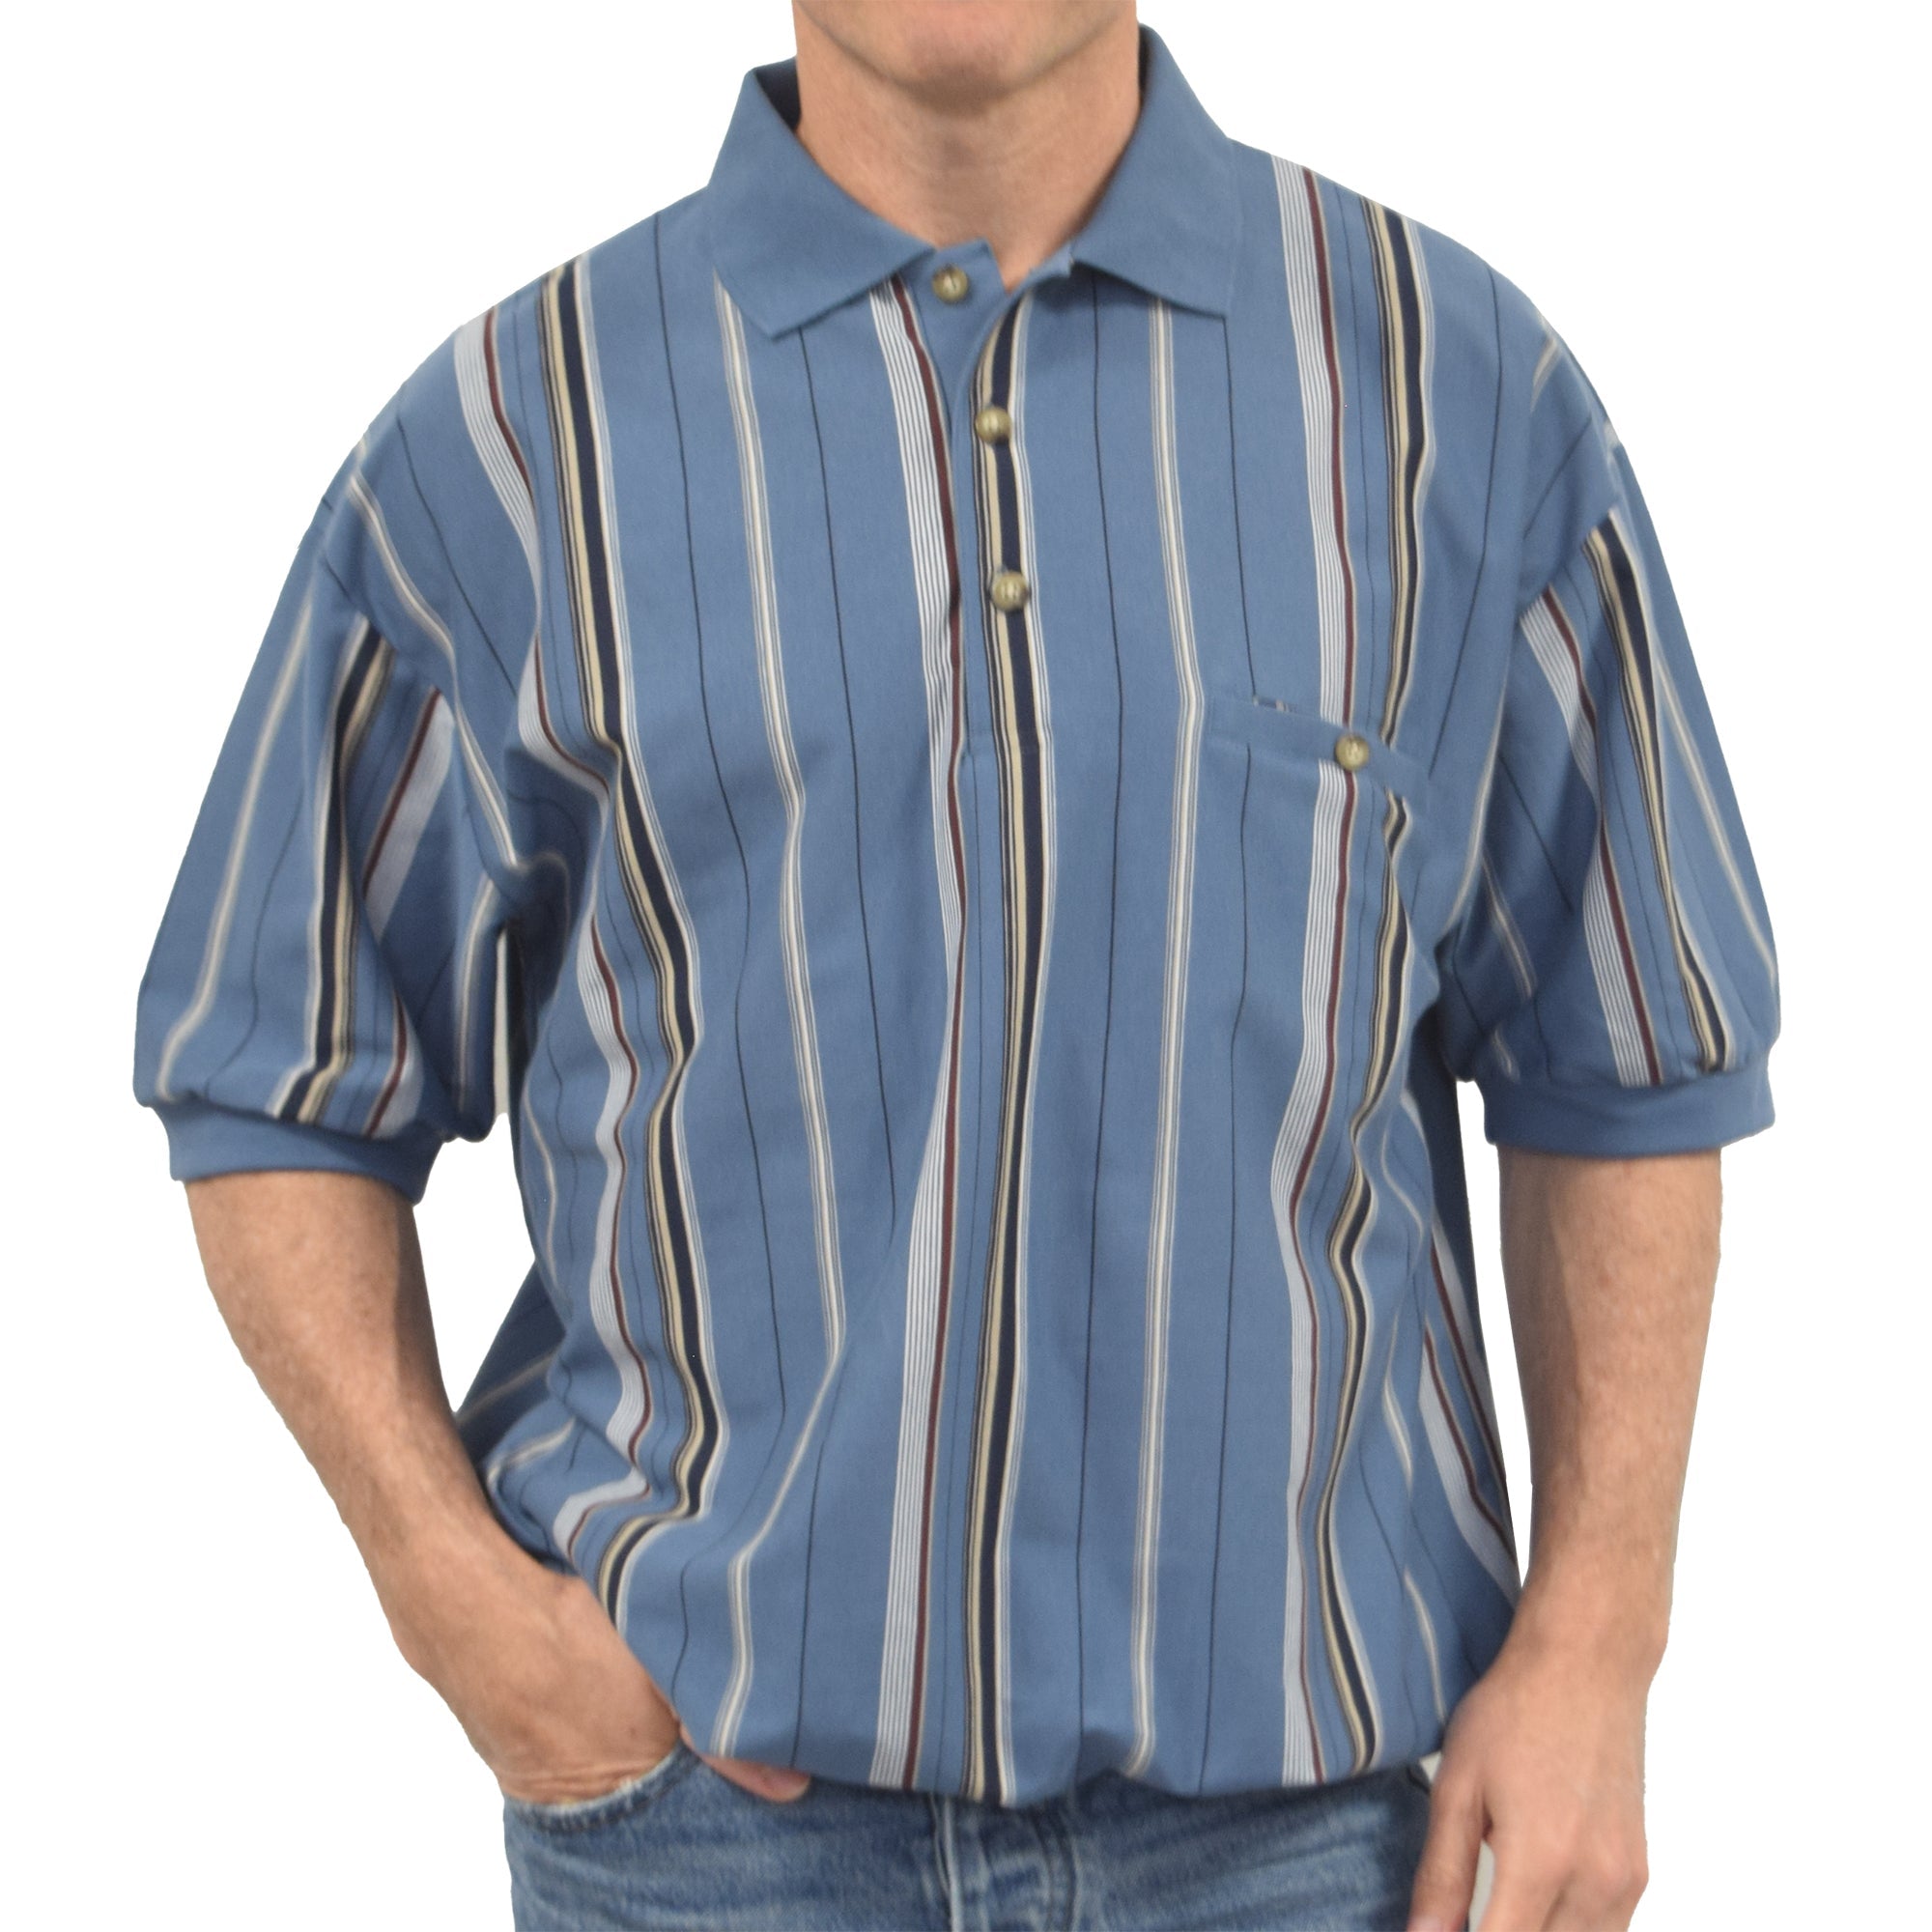 Classics By Palmland Vertical Short Sleeve Big and Tall Banded Bottom Shirt 6090-V1 Blue